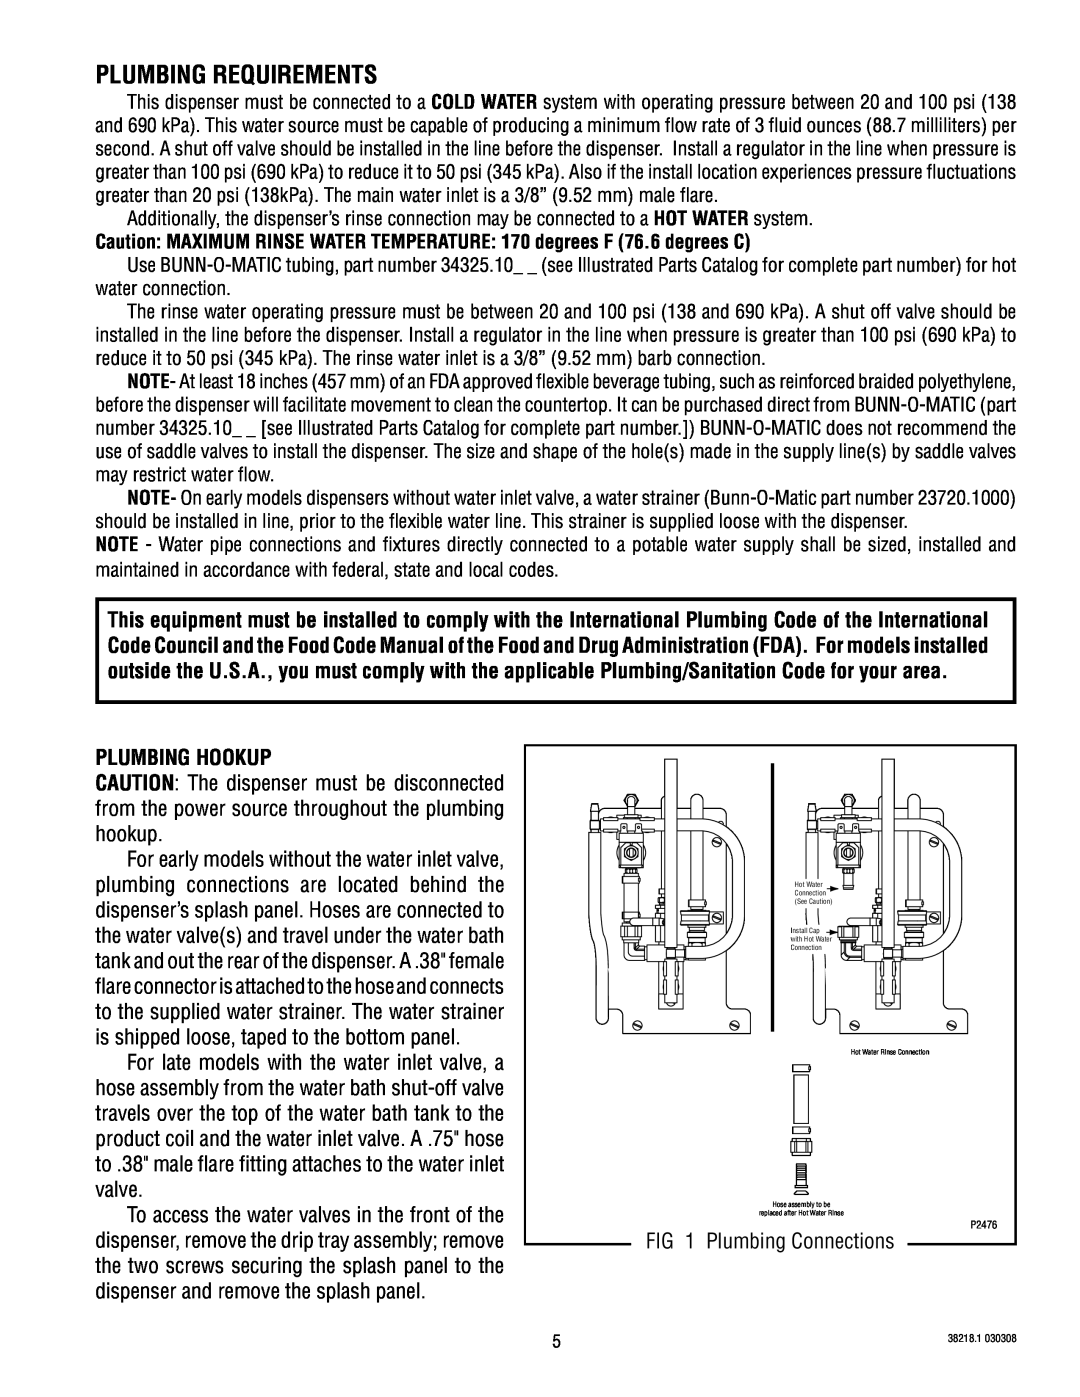 Bunn S/N 0005473 & UP manual Plumbing Requirements, Plumbing Hookup 